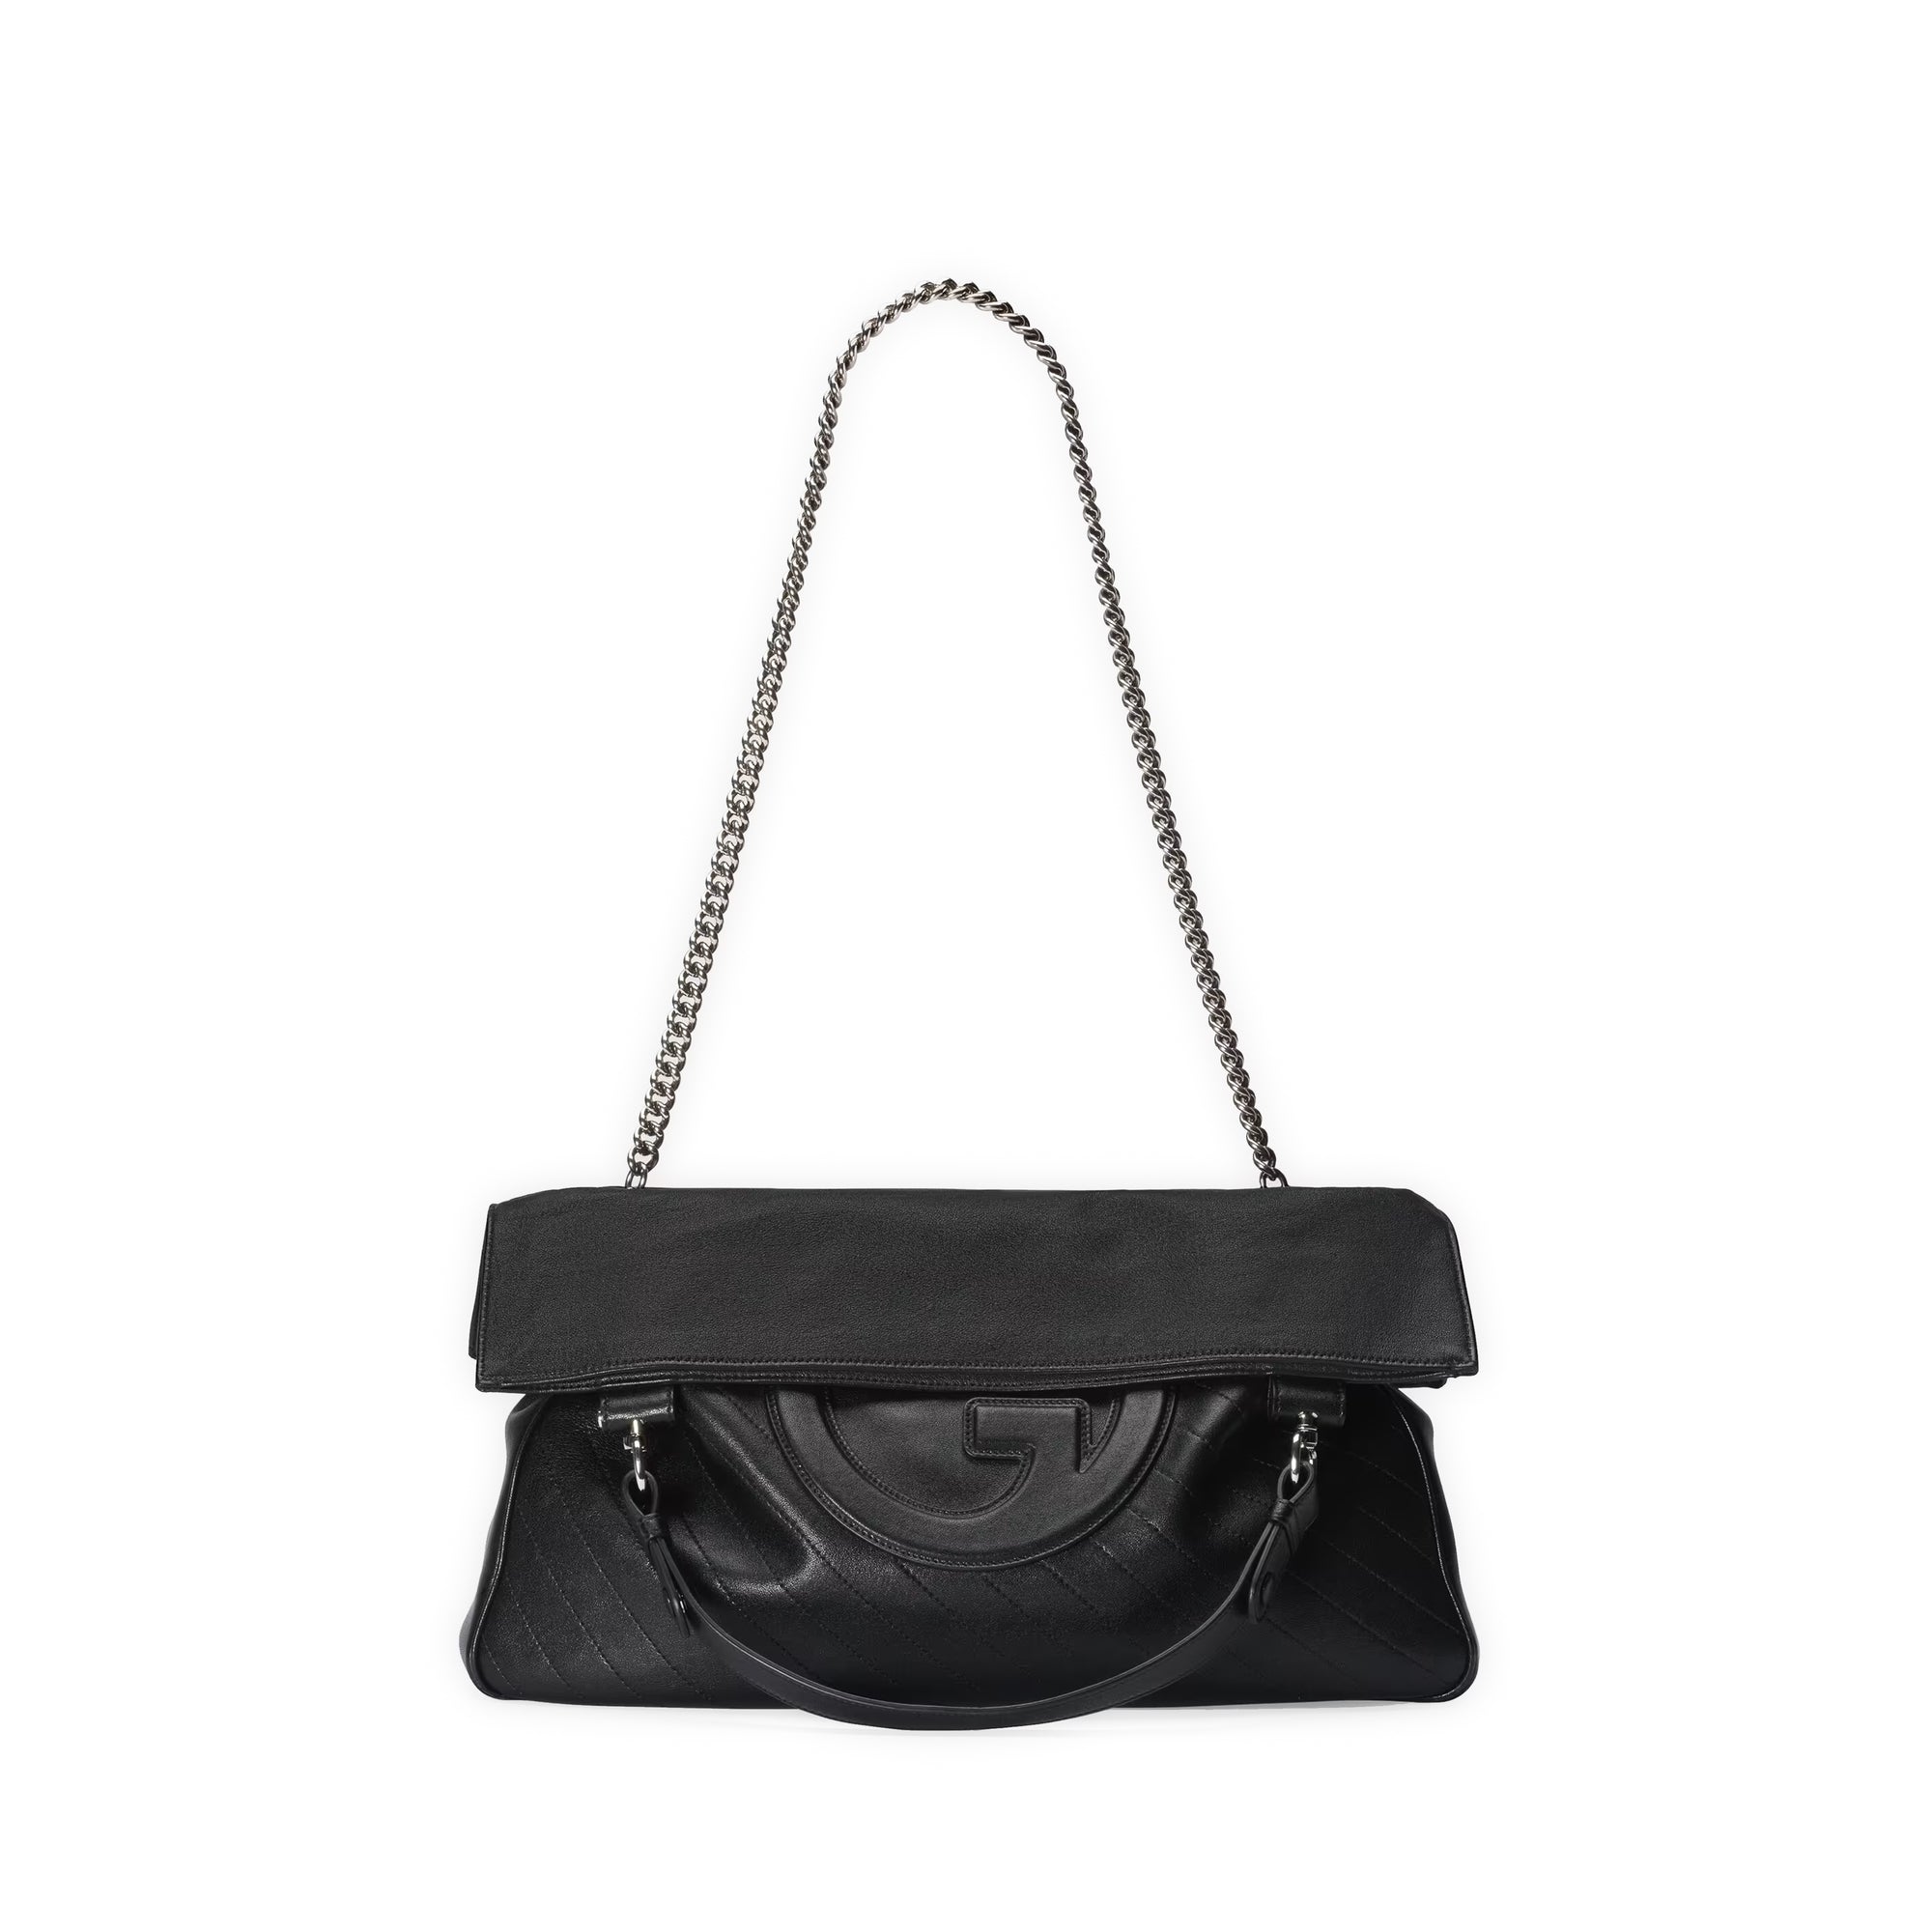 Gucci - Women’s Blondie Medium Tote Bag - (Black) view 3